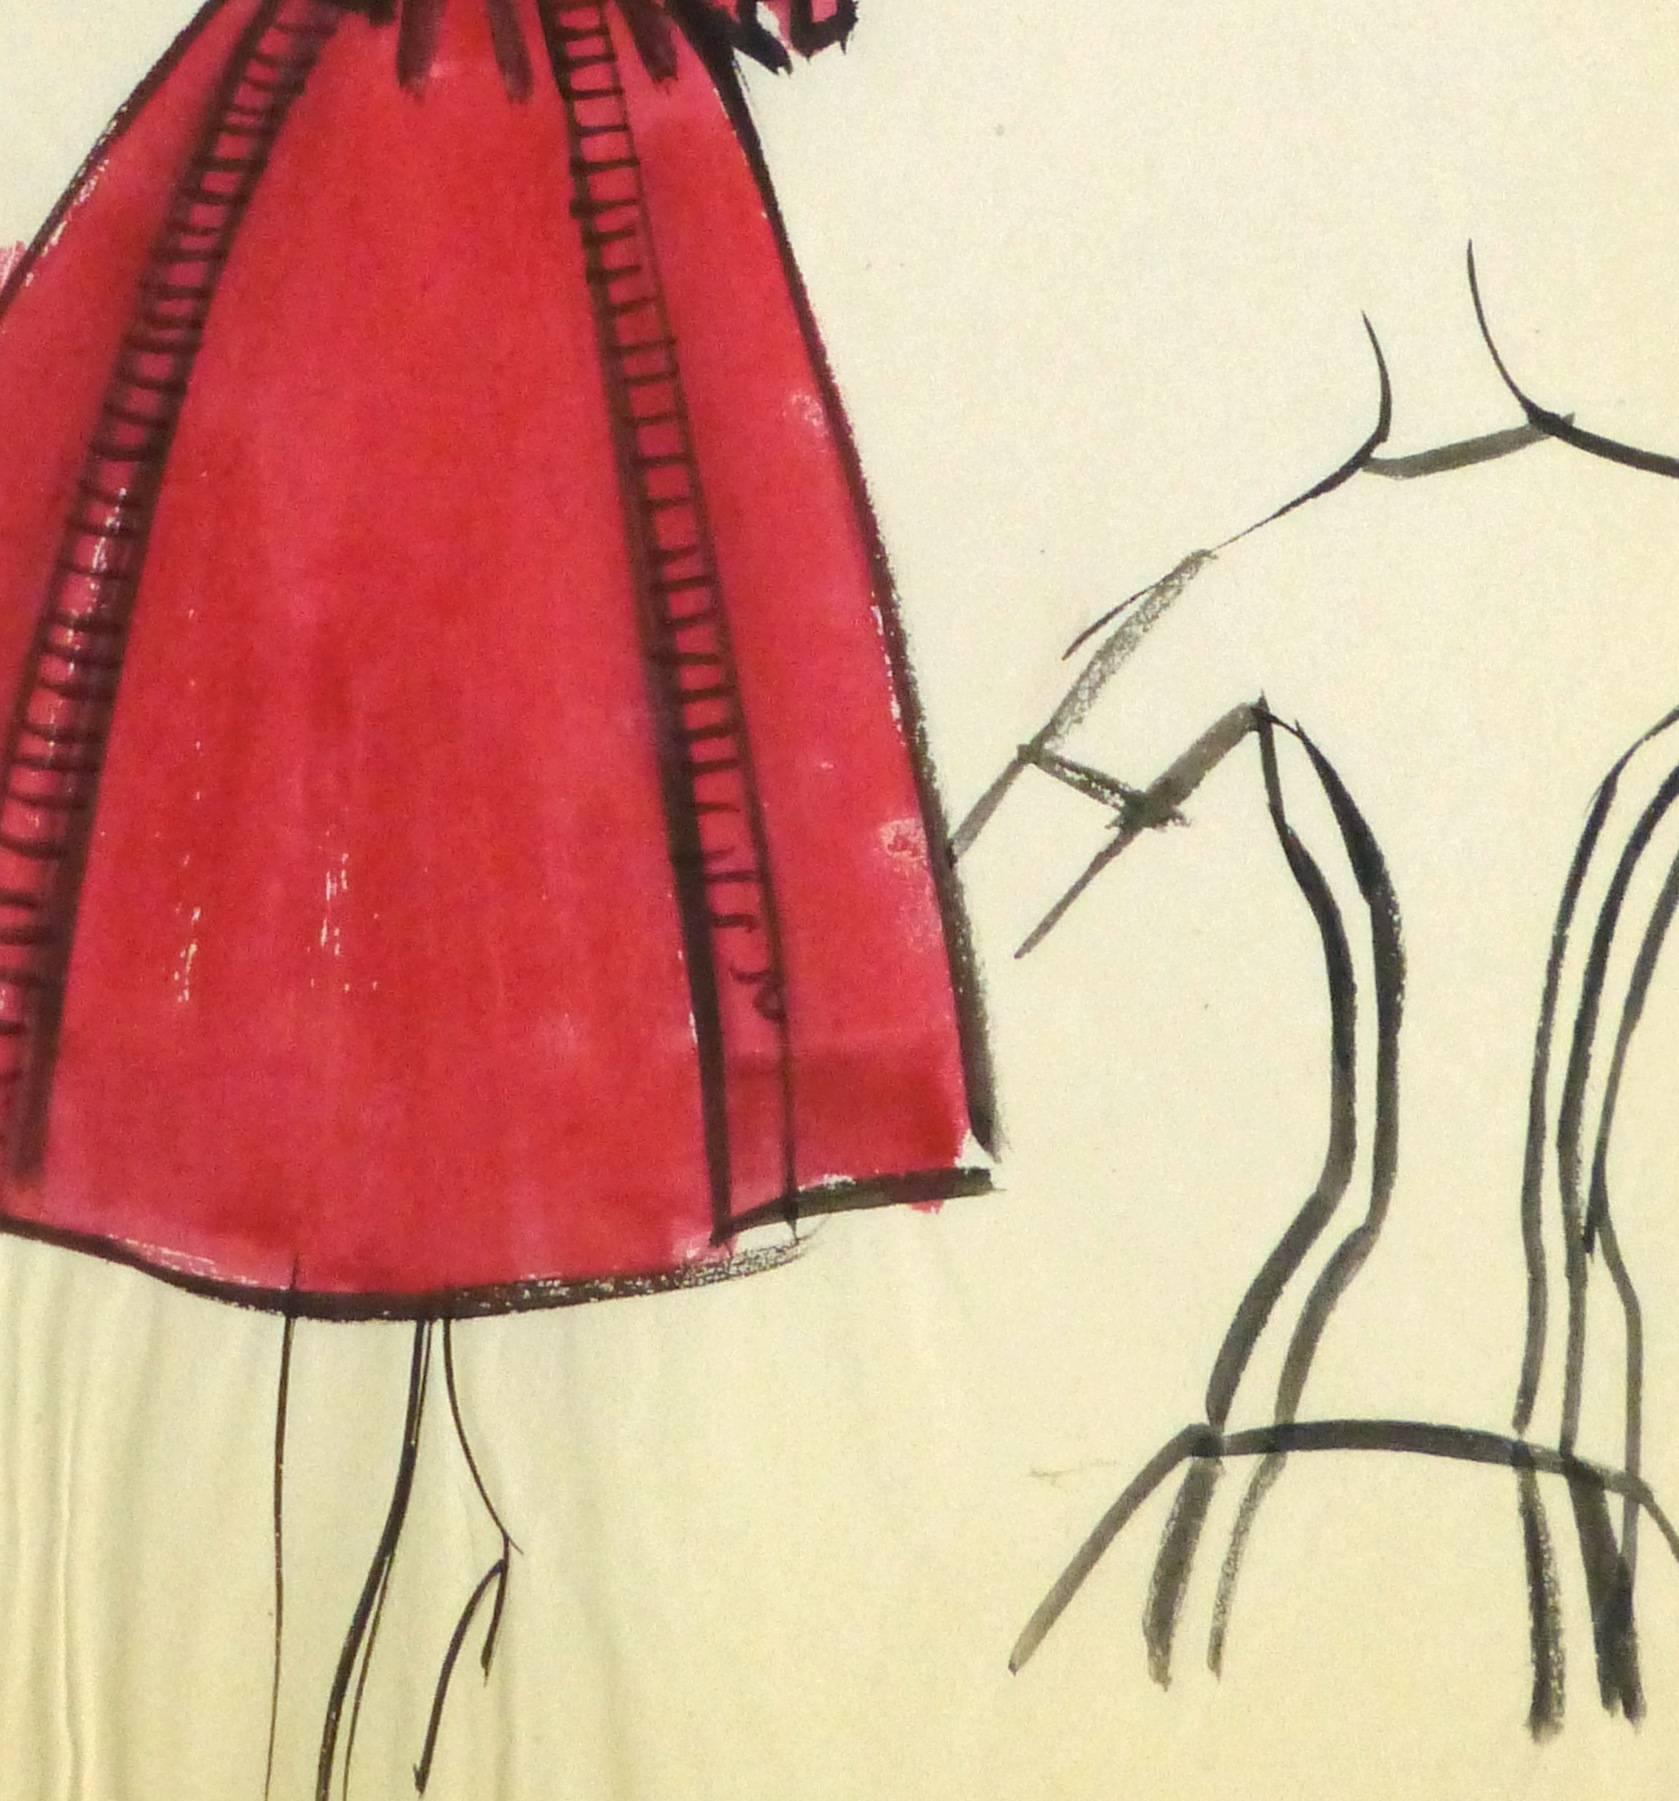 Vintage Balmain Fashion Sketch - Red Dress and Coat - White Figurative Art by Pierre Balmain